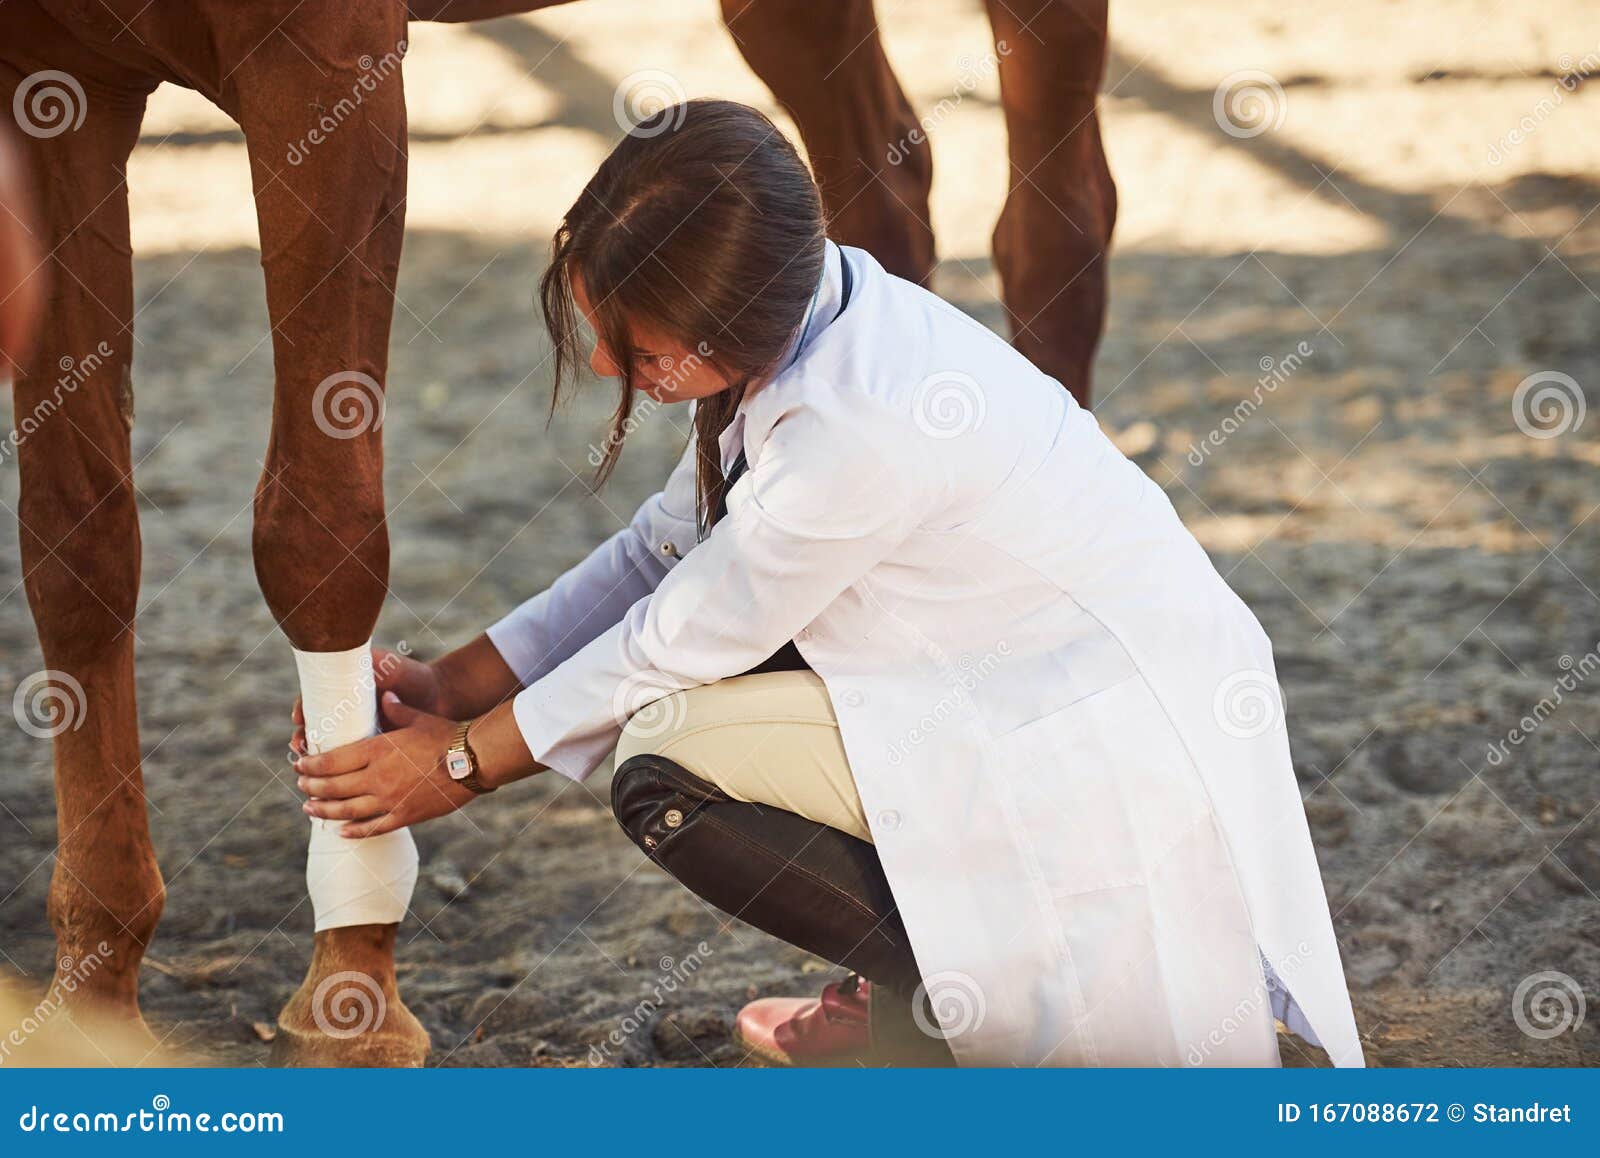 using bandage to heal the leg. female vet examining horse outdoors at the farm at daytime